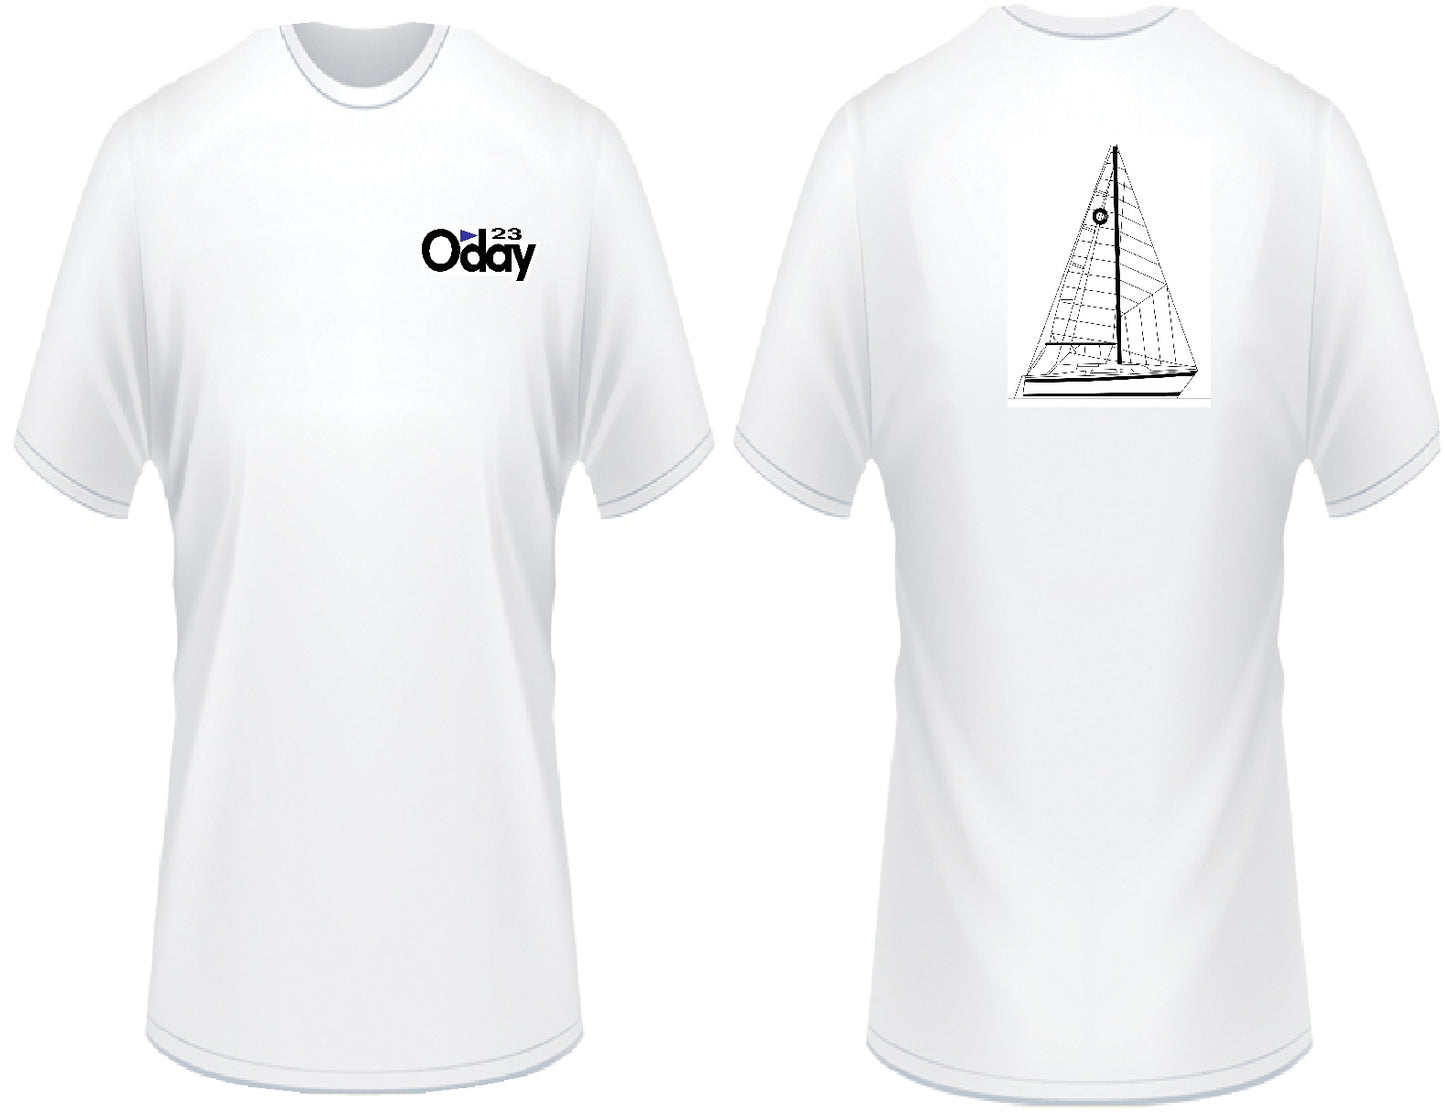 Oday 23 T-Shirt